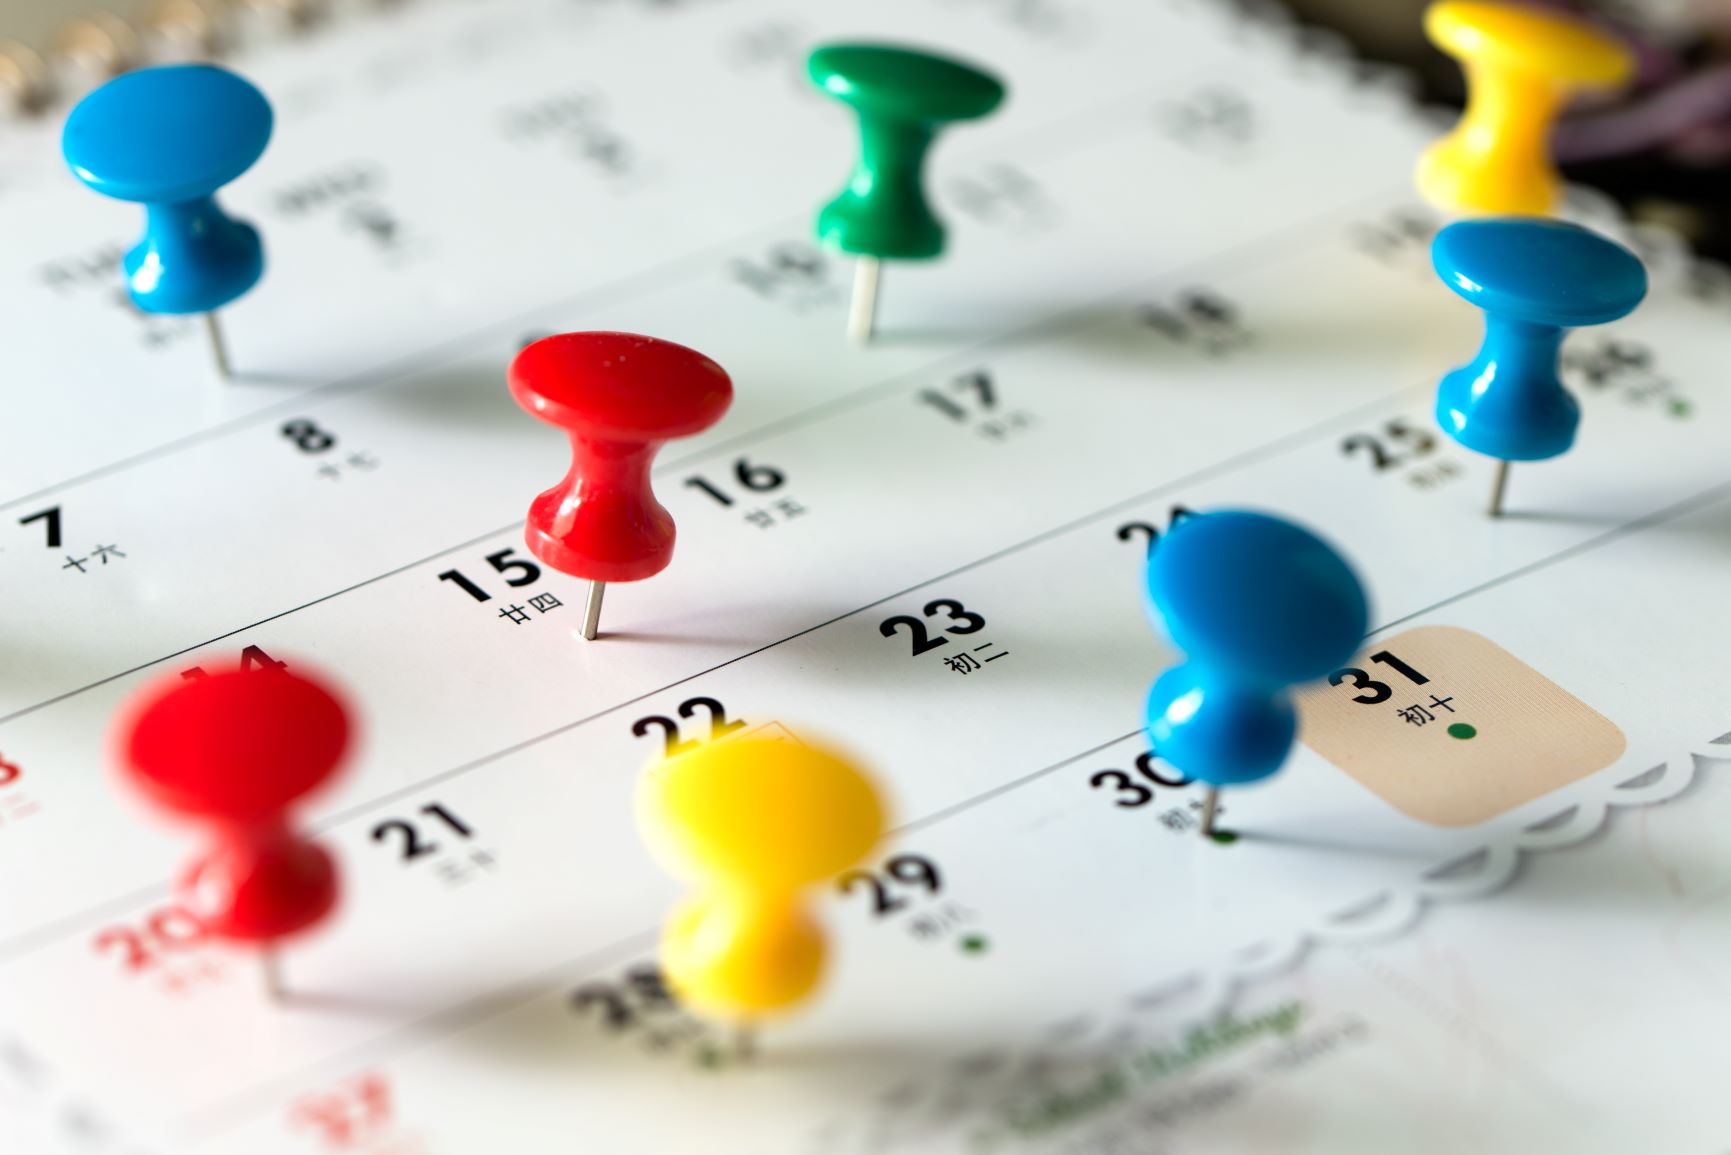 Thumb tack pins on a calendar as a reminder